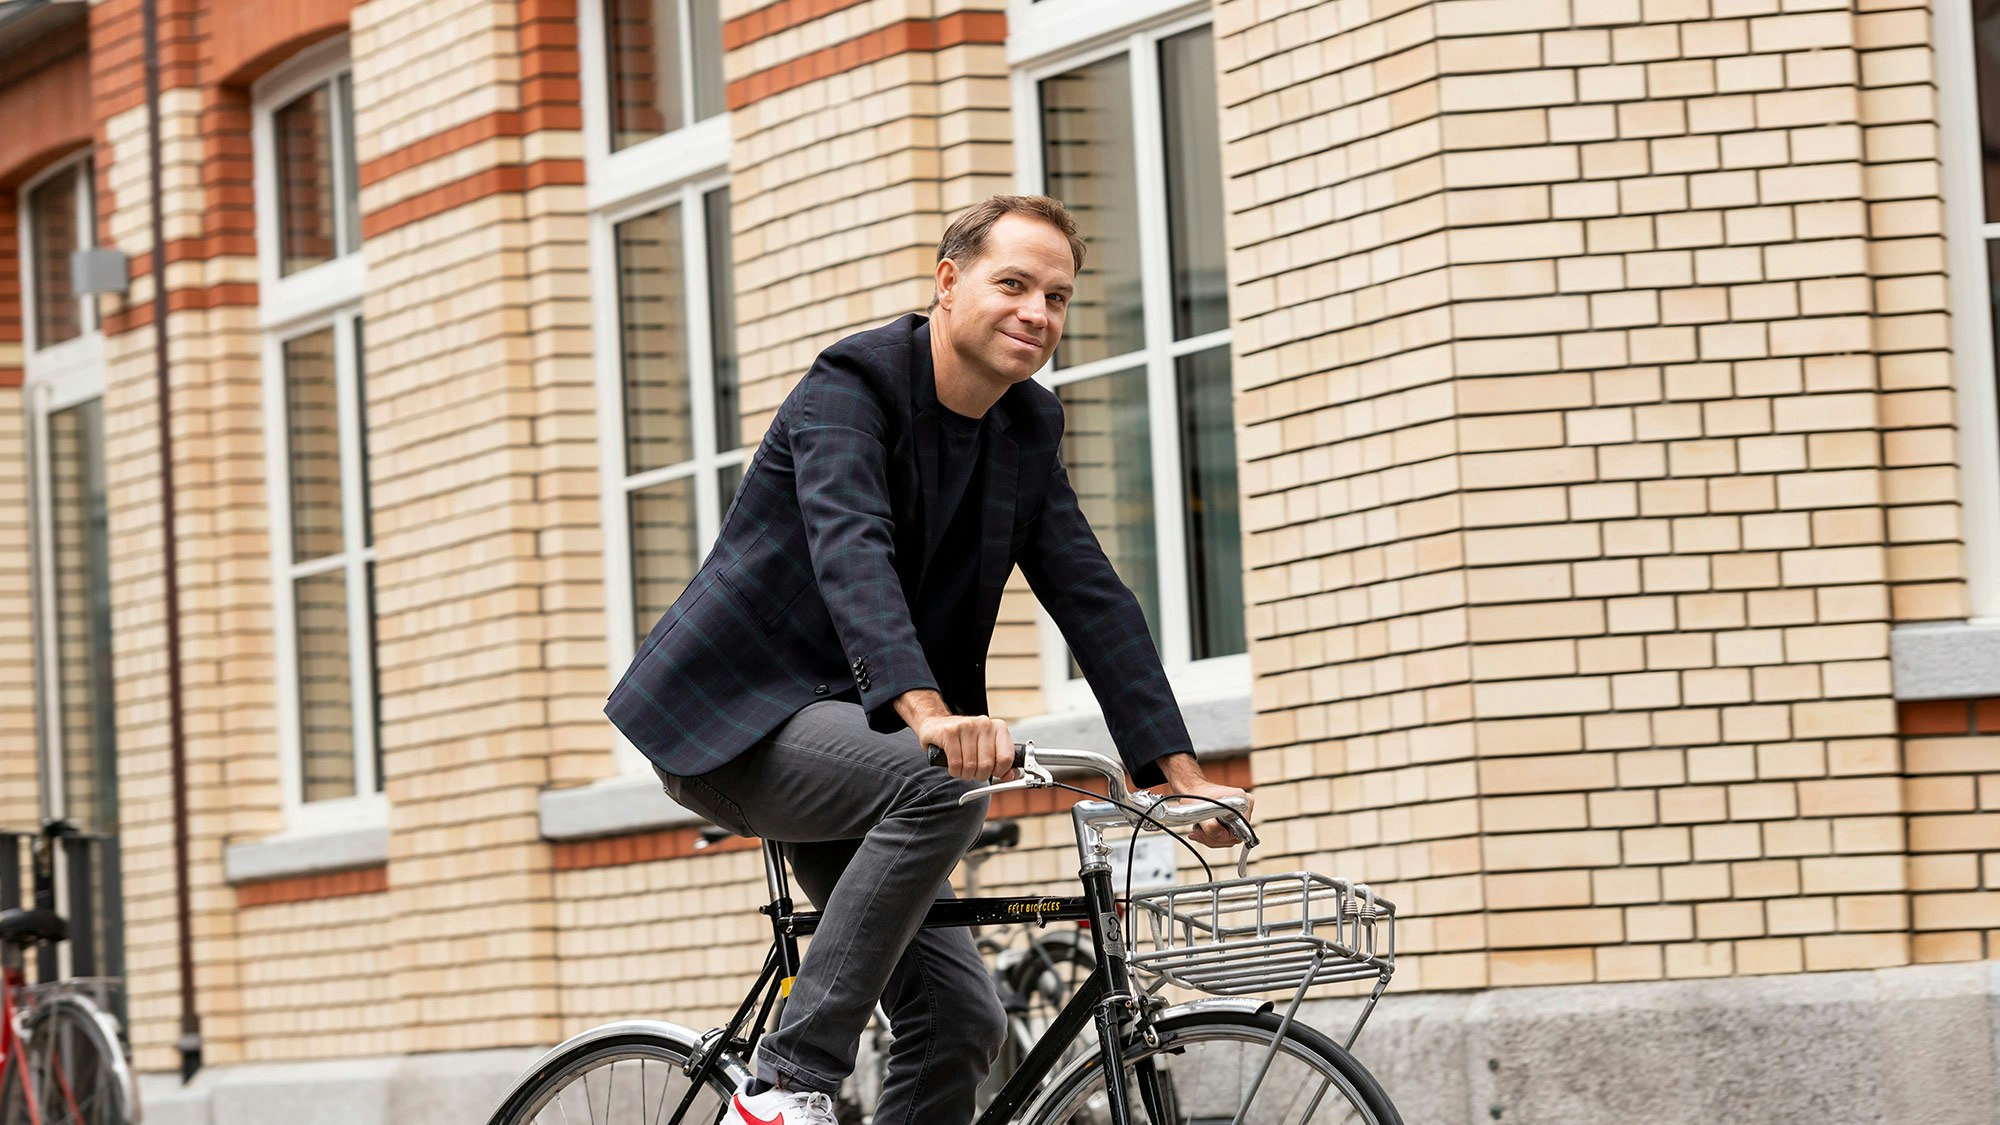 Tobias Felbecker riding a city bike.